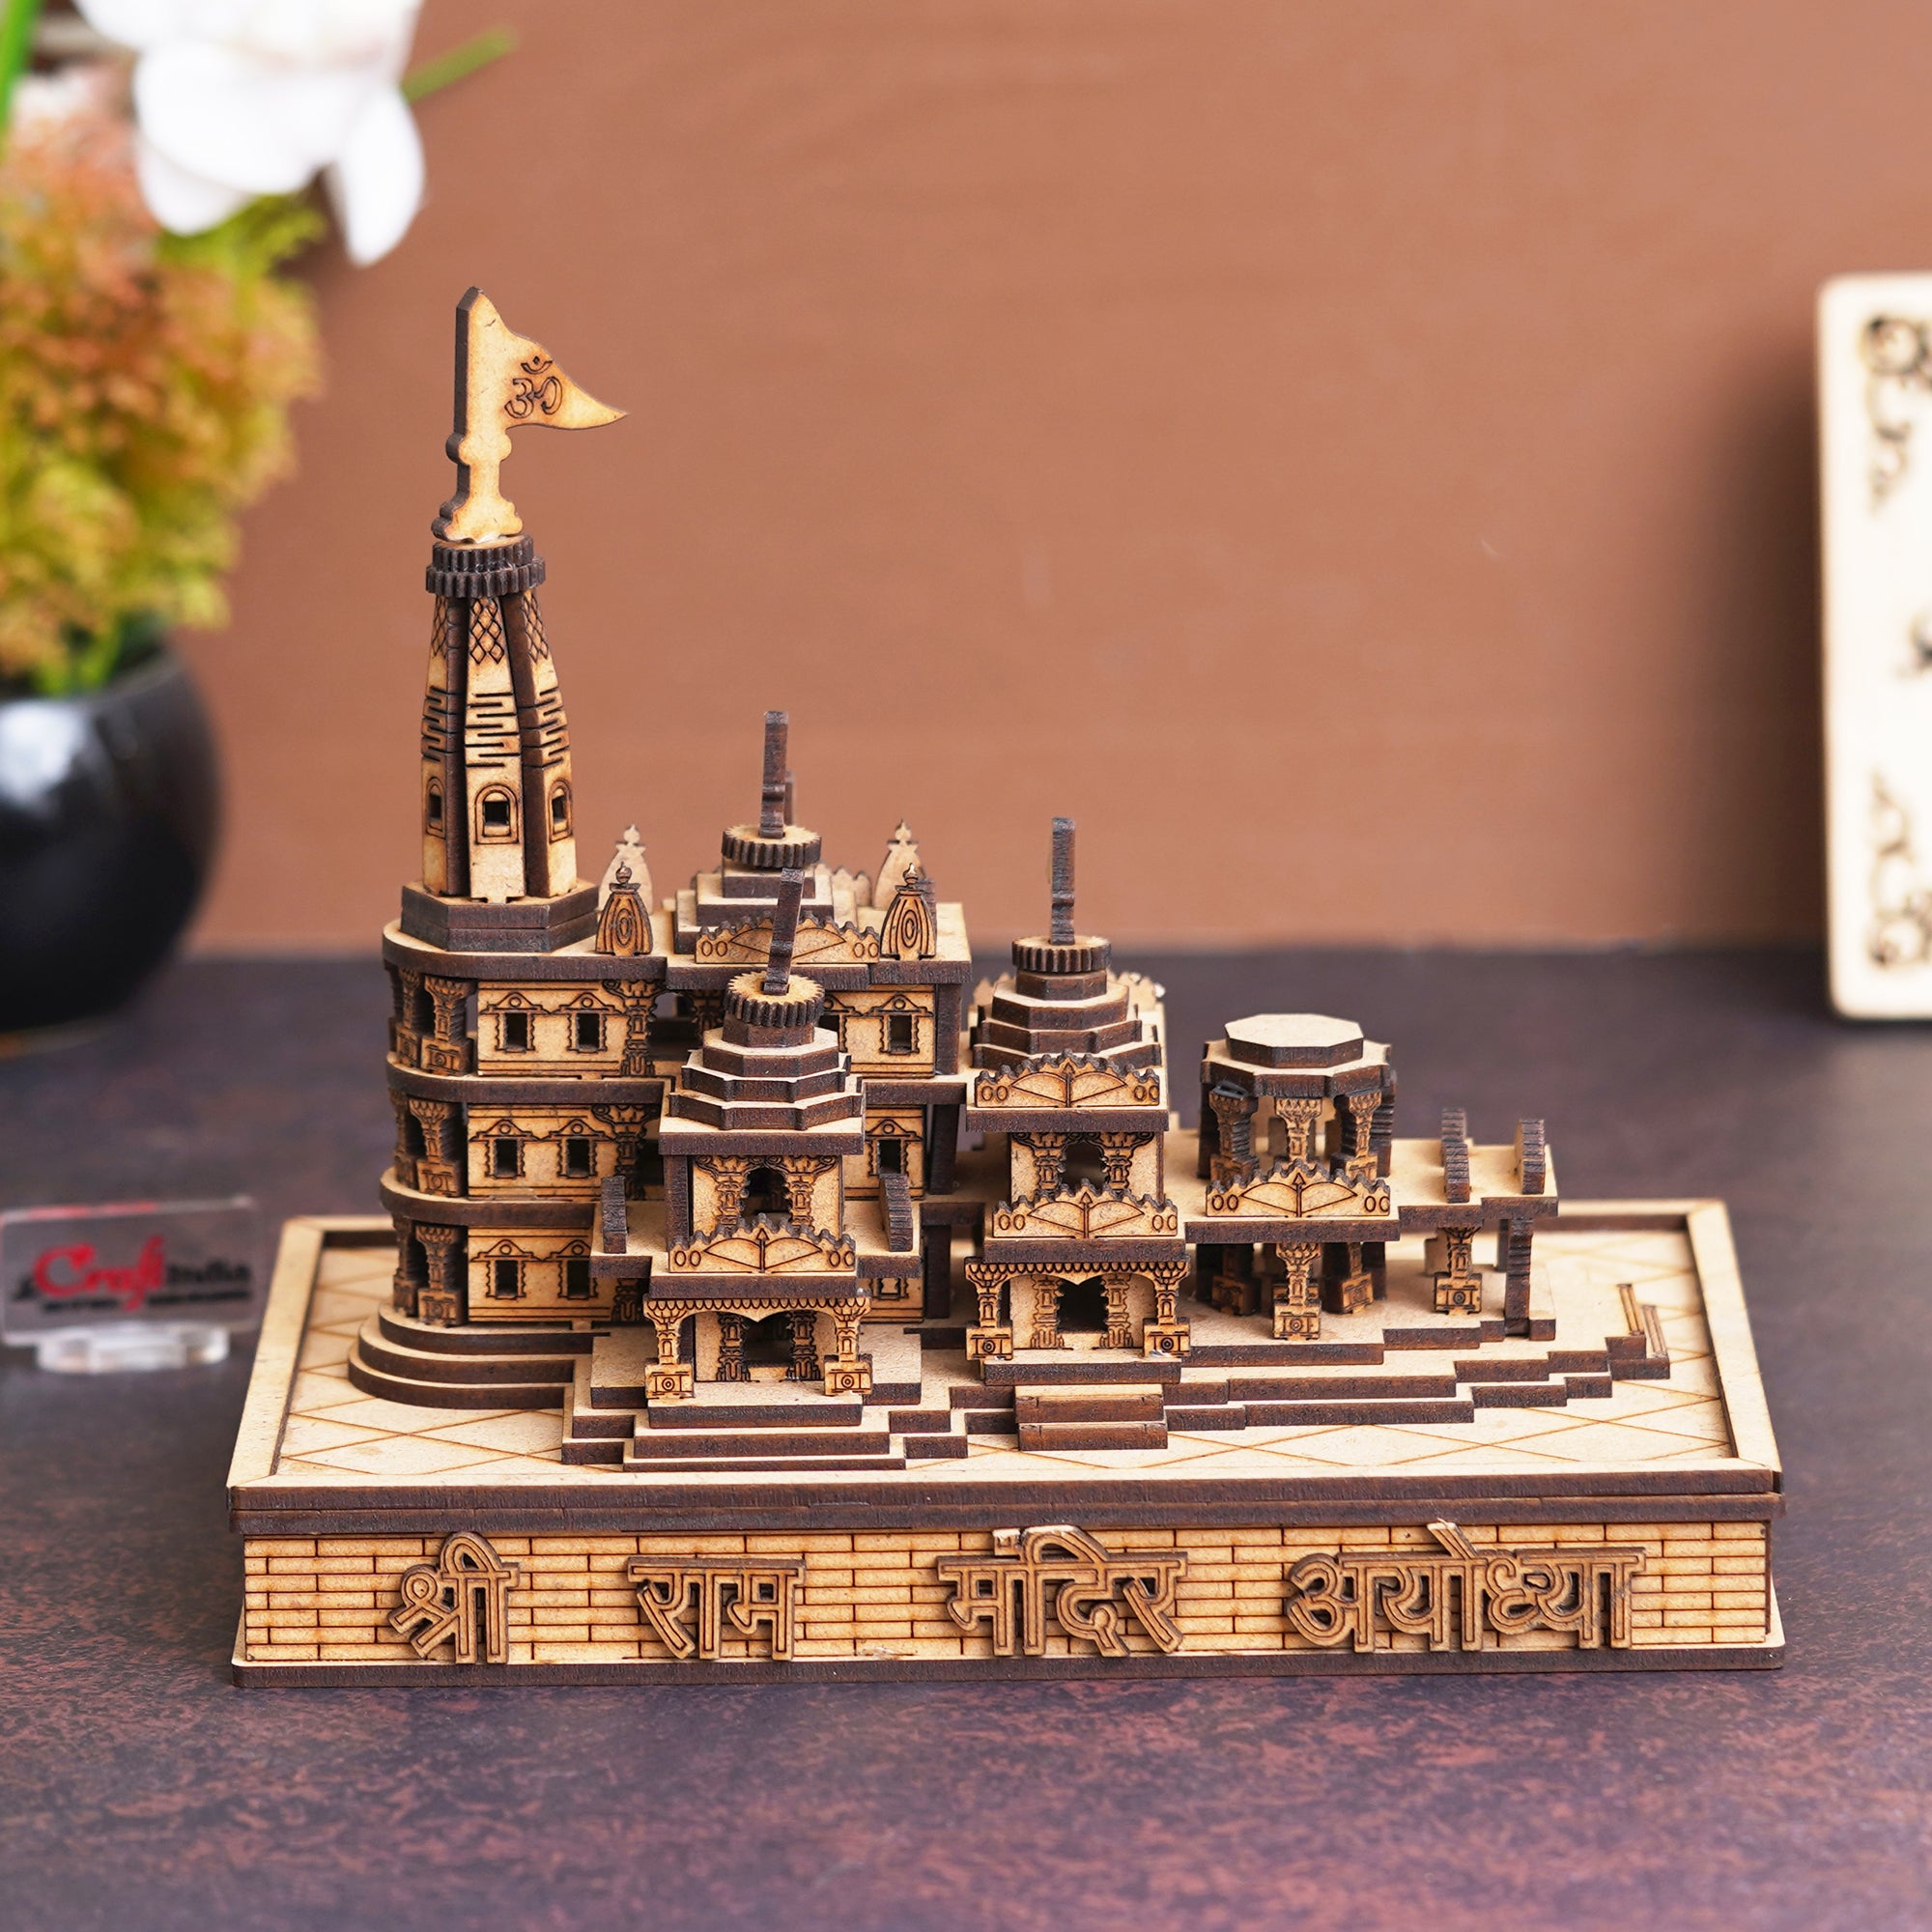 eCraftIndia Shri Ram Mandir Ayodhya Model - Wooden MDF Craftsmanship Authentic Designer Temple - Ideal for Home Temple, Decor, and Spiritual Gifting (Beige, Brown)